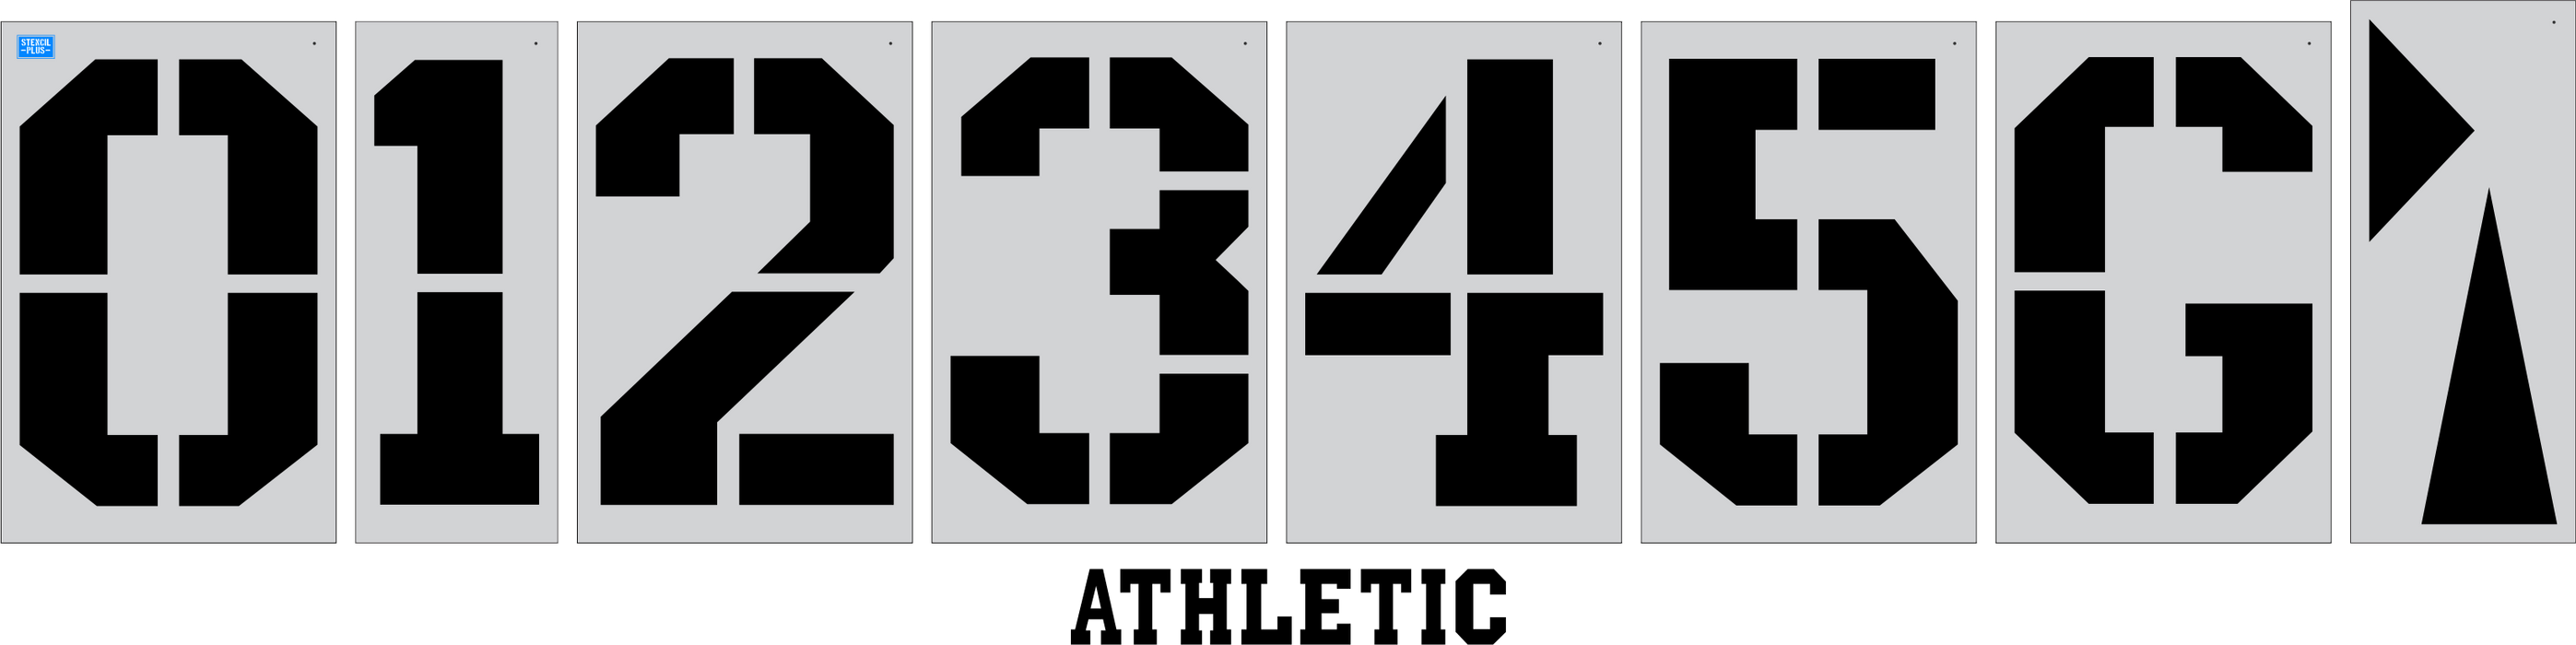 Stencil Plus Field Stencils .60 / Athletic 72" x 48" Football Field Number Athletic Marking Track & Field Stencils